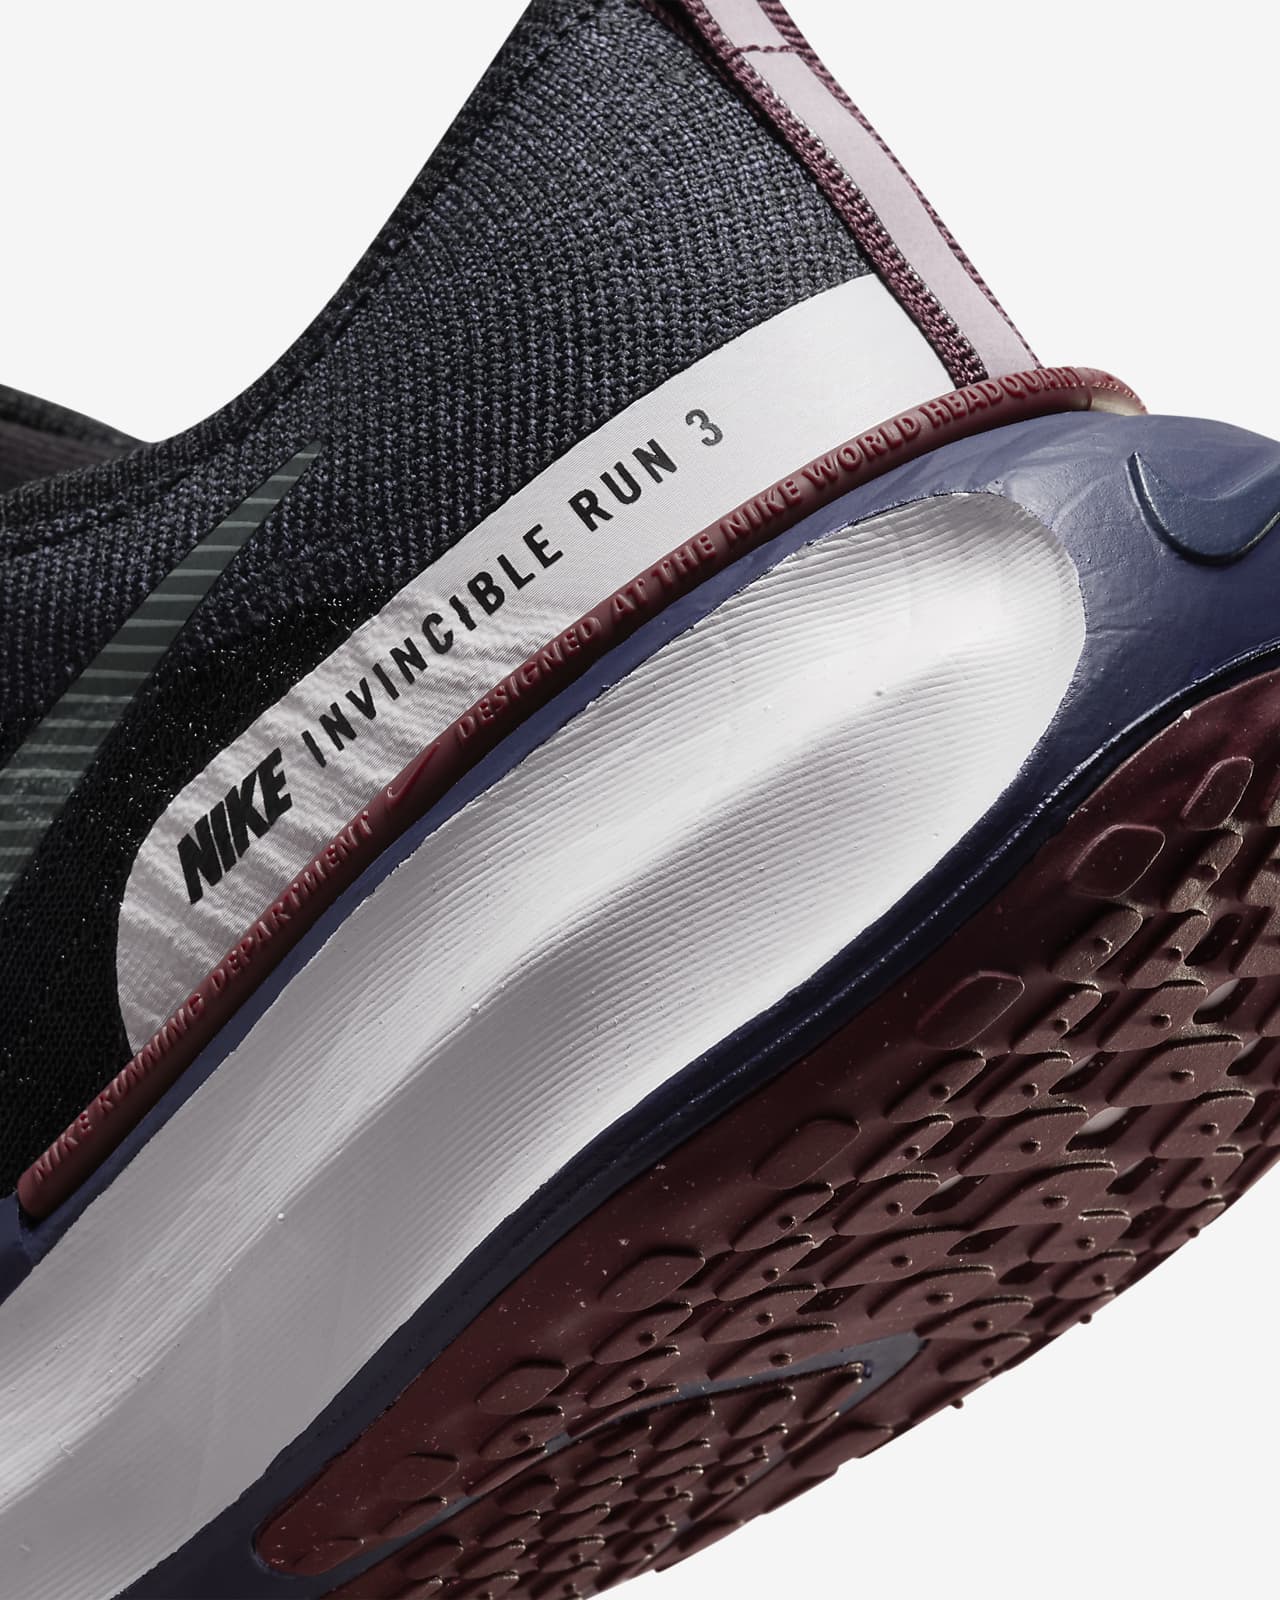 Nike Invincible 3 By You Custom Women's Road Running Shoes.